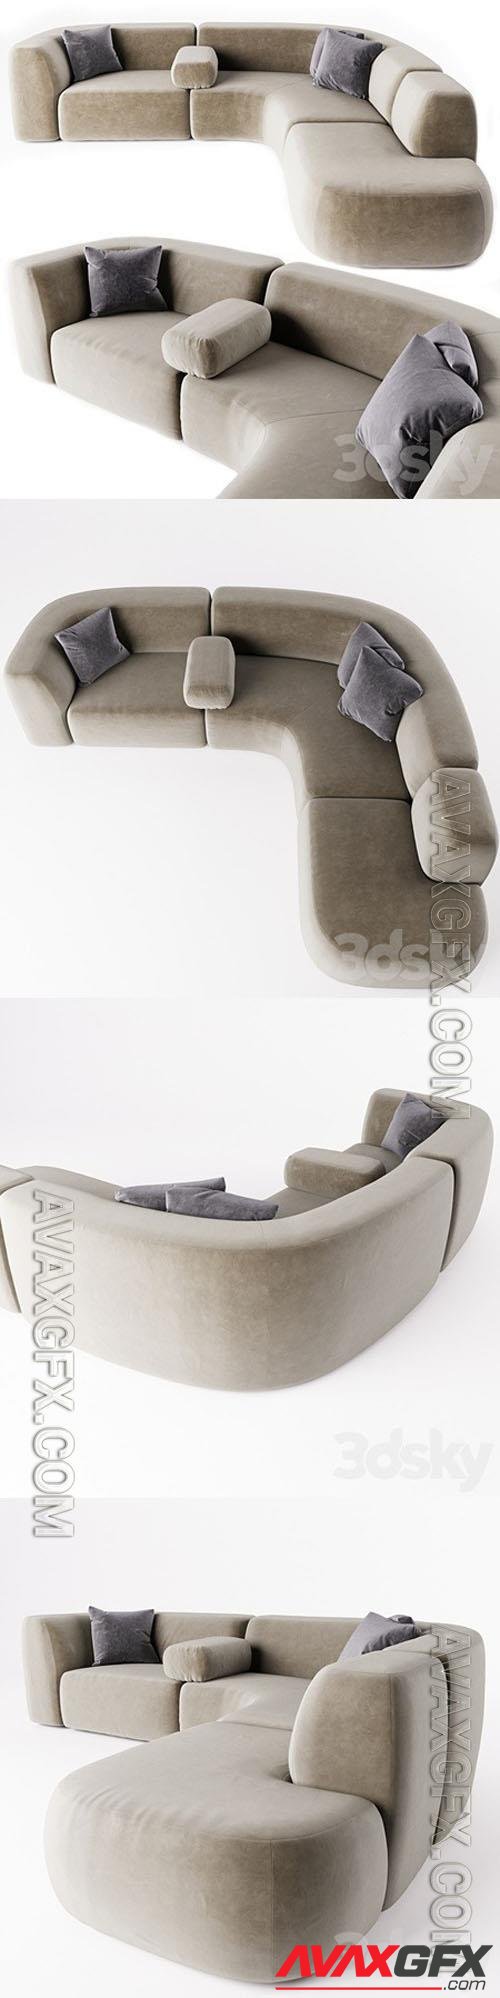 Piet Boon  BO sofa - 3d model